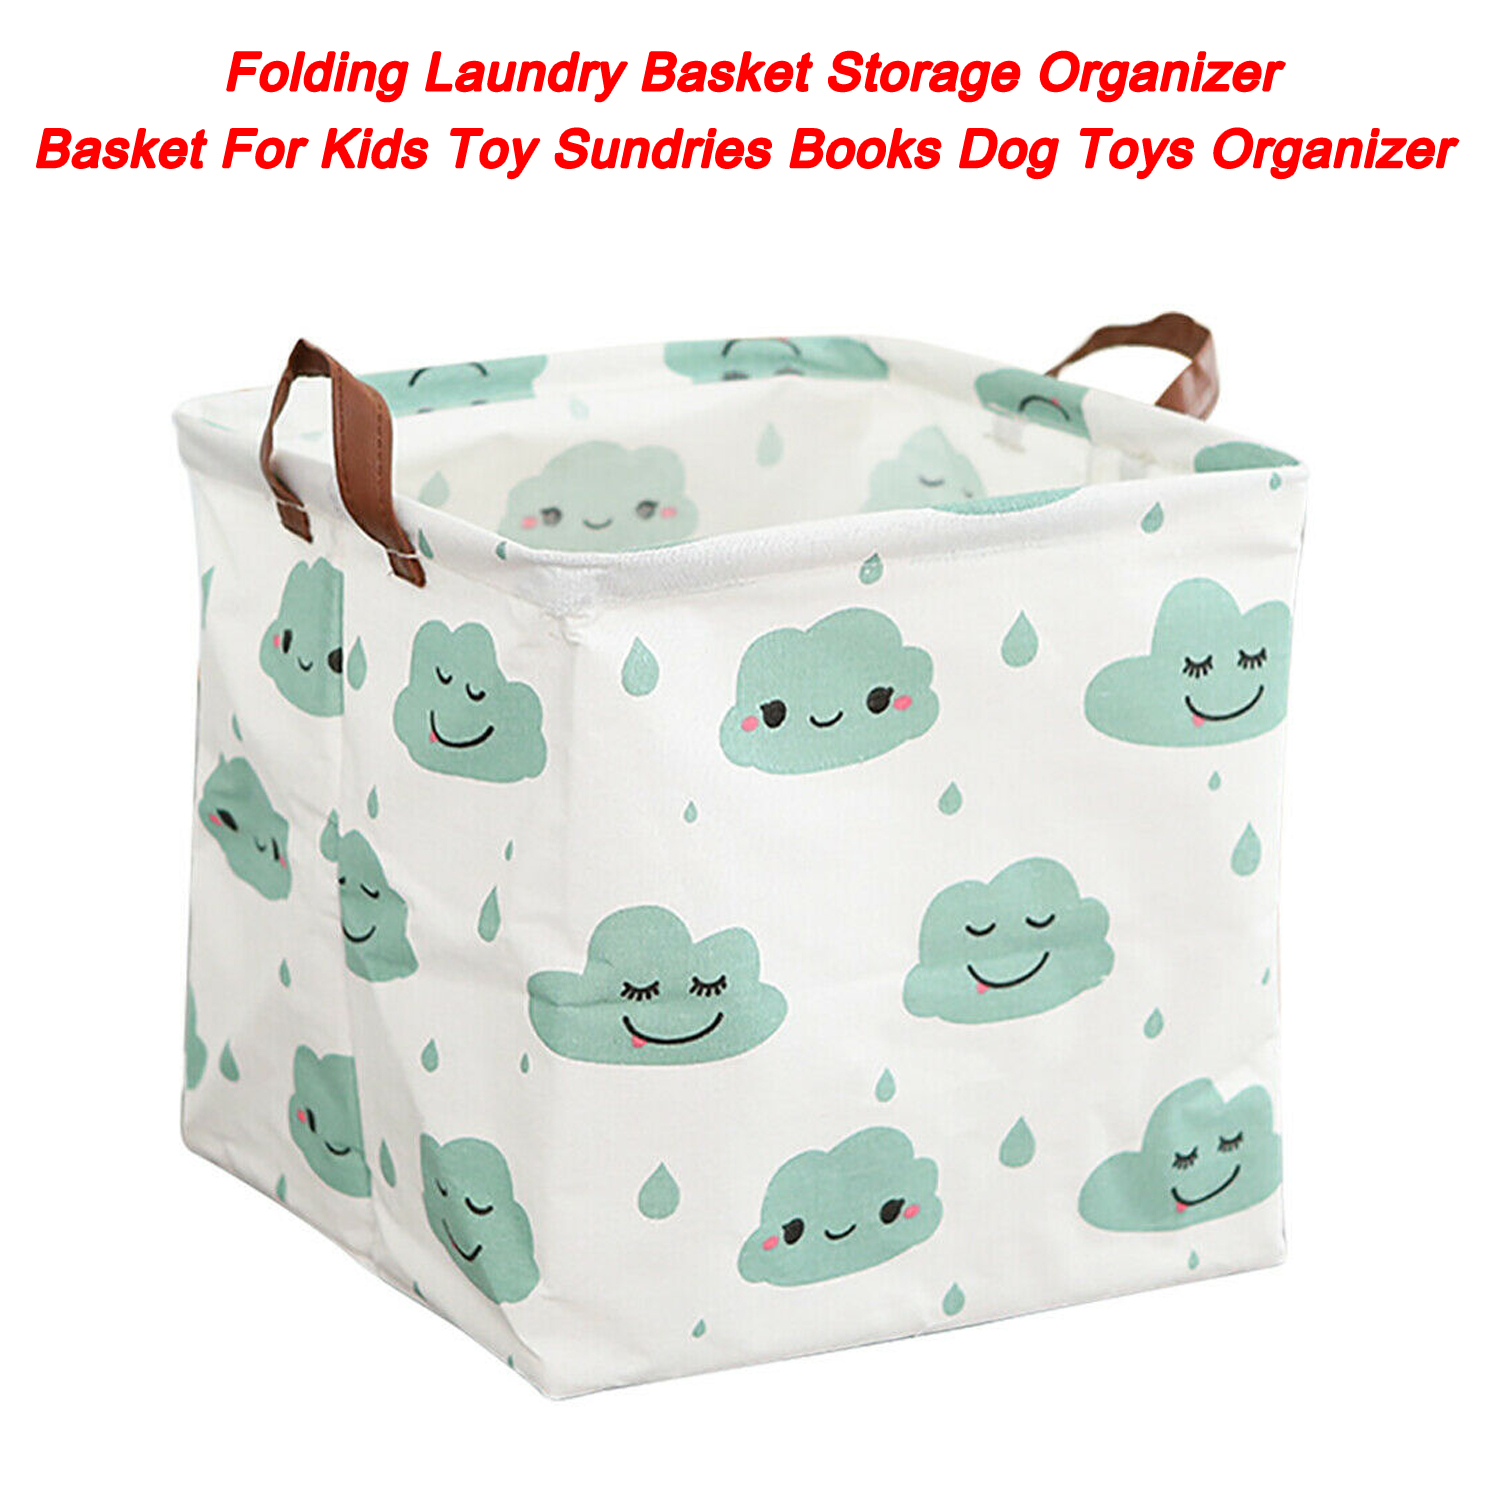 Folding Laundry Basket Storage Organizer Basket For Kids Toy Sundries Books Dog Toys Organizer